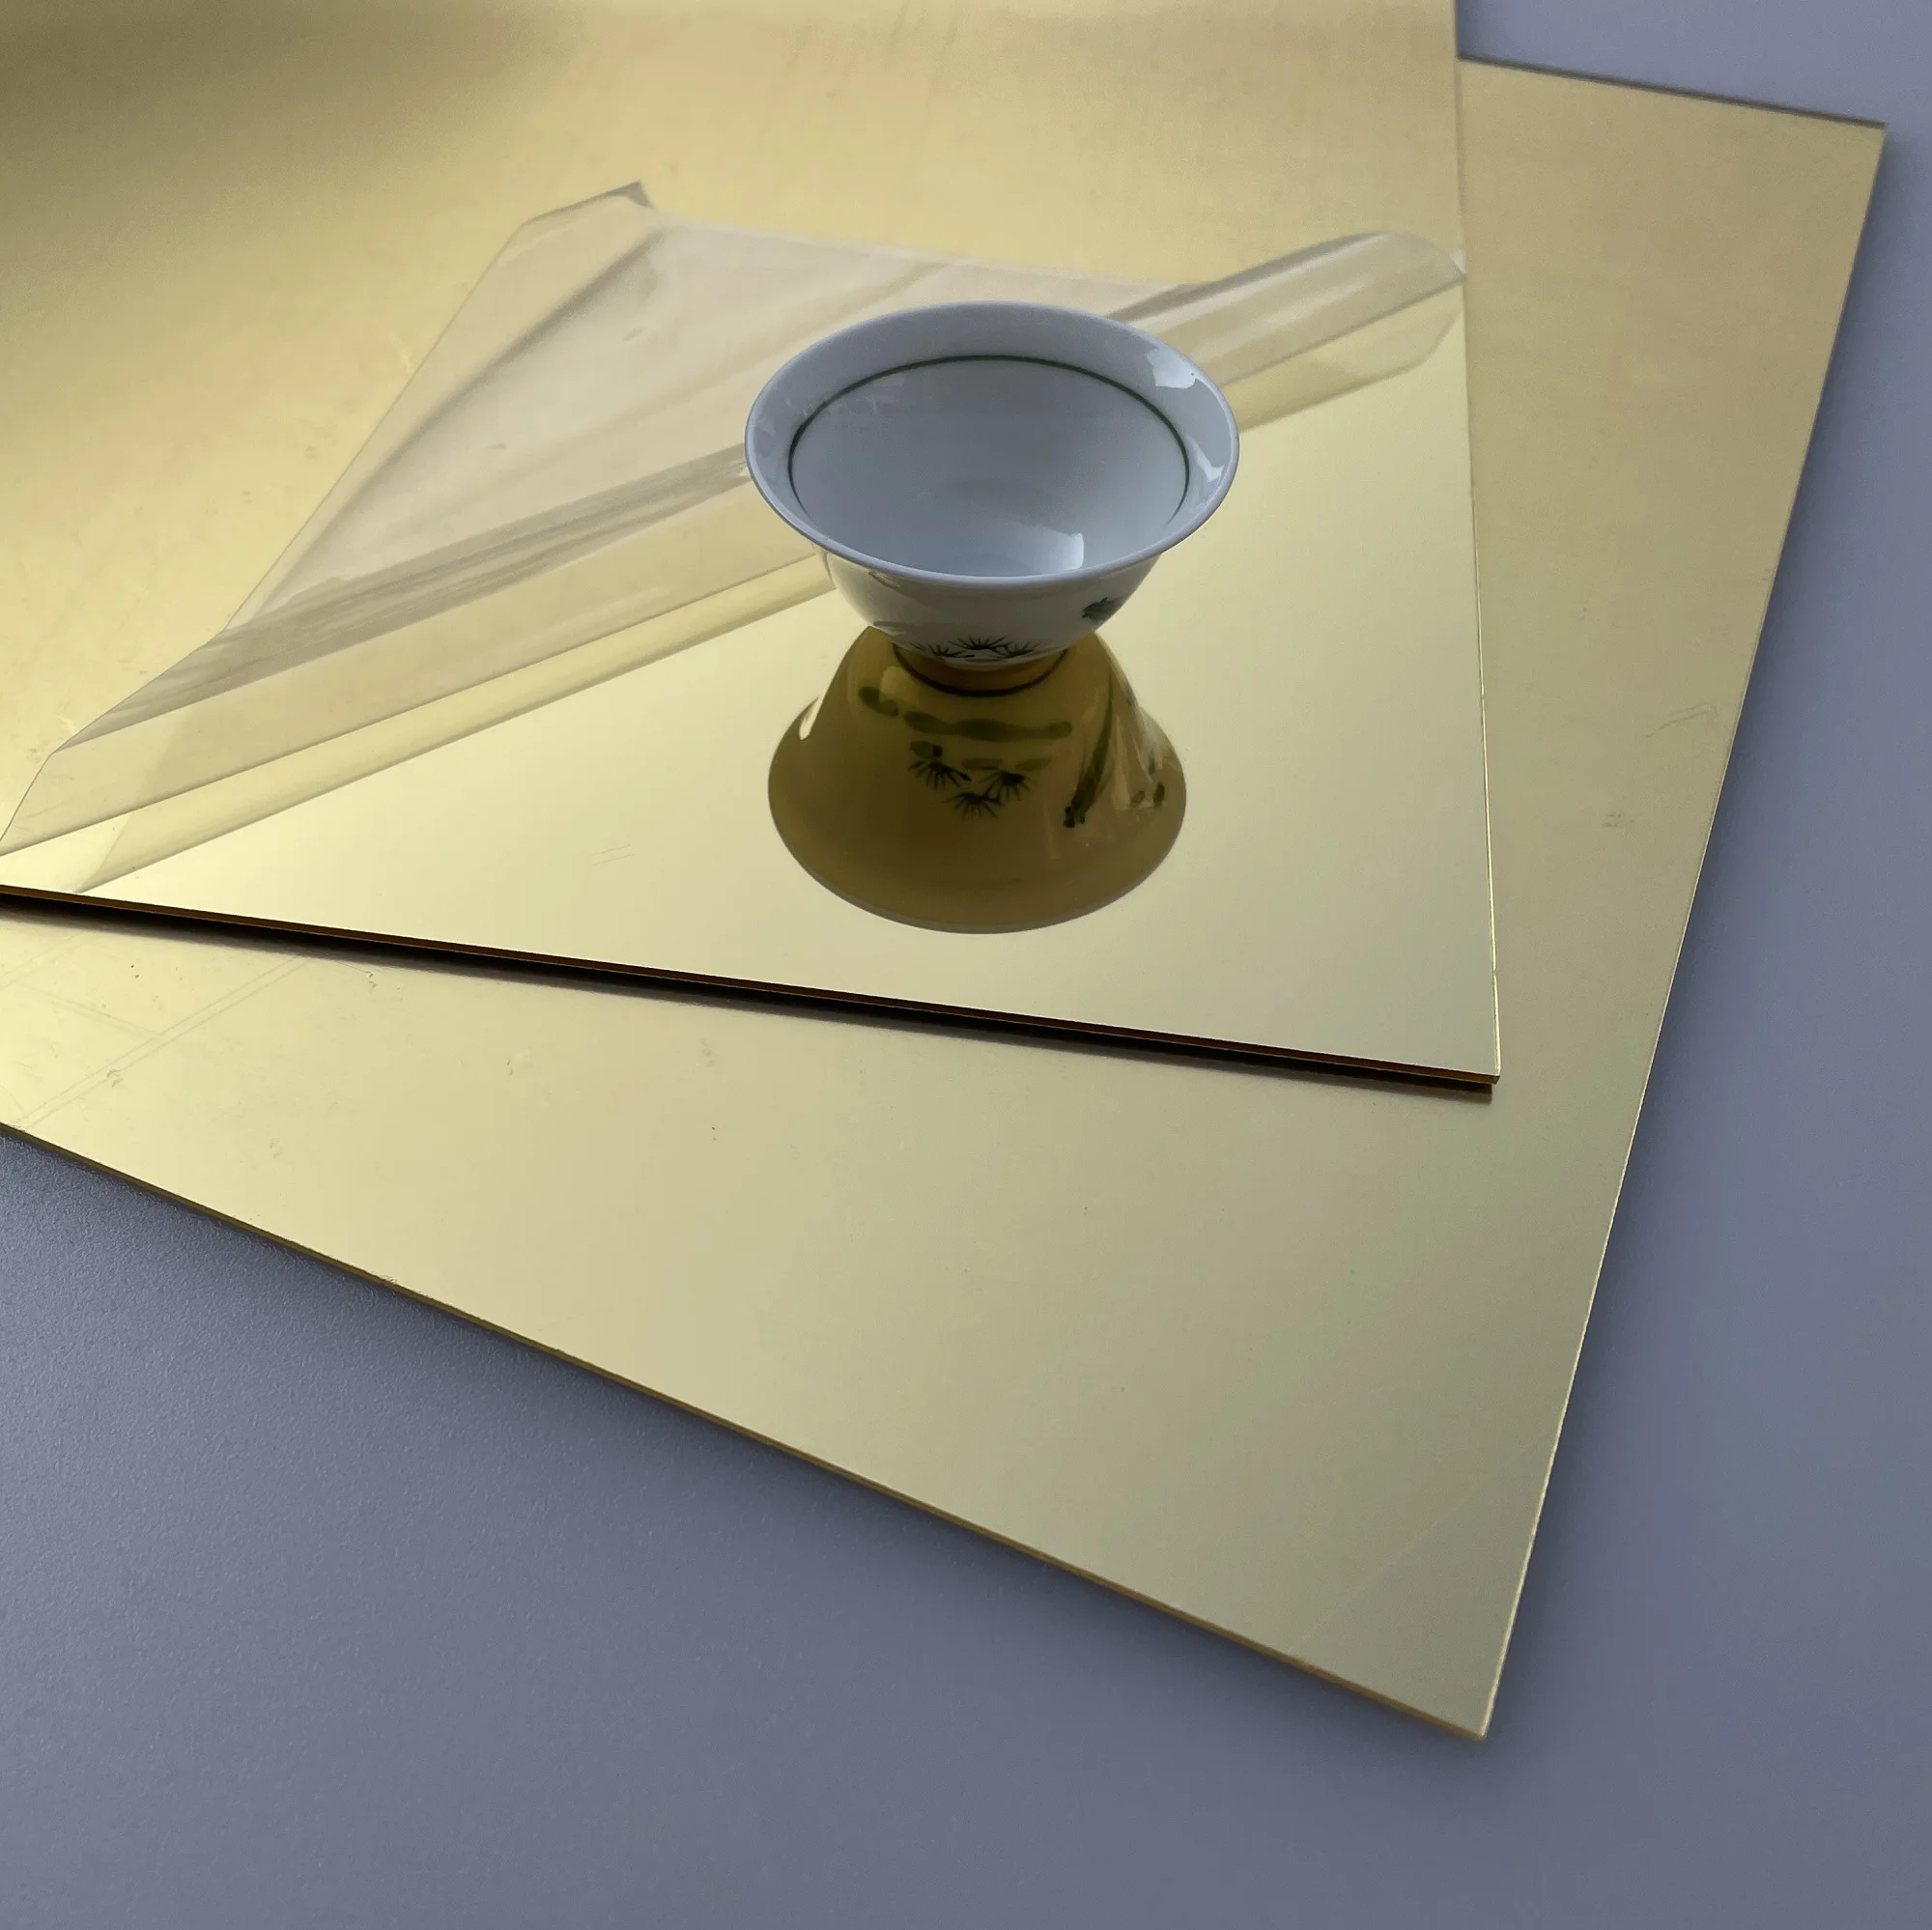 2MM 3MM Acrylic Gold Mirror Square Sheet Plastic Pier Glass Hotel  Decorative Lens Plexiglass Not Easy To Broken